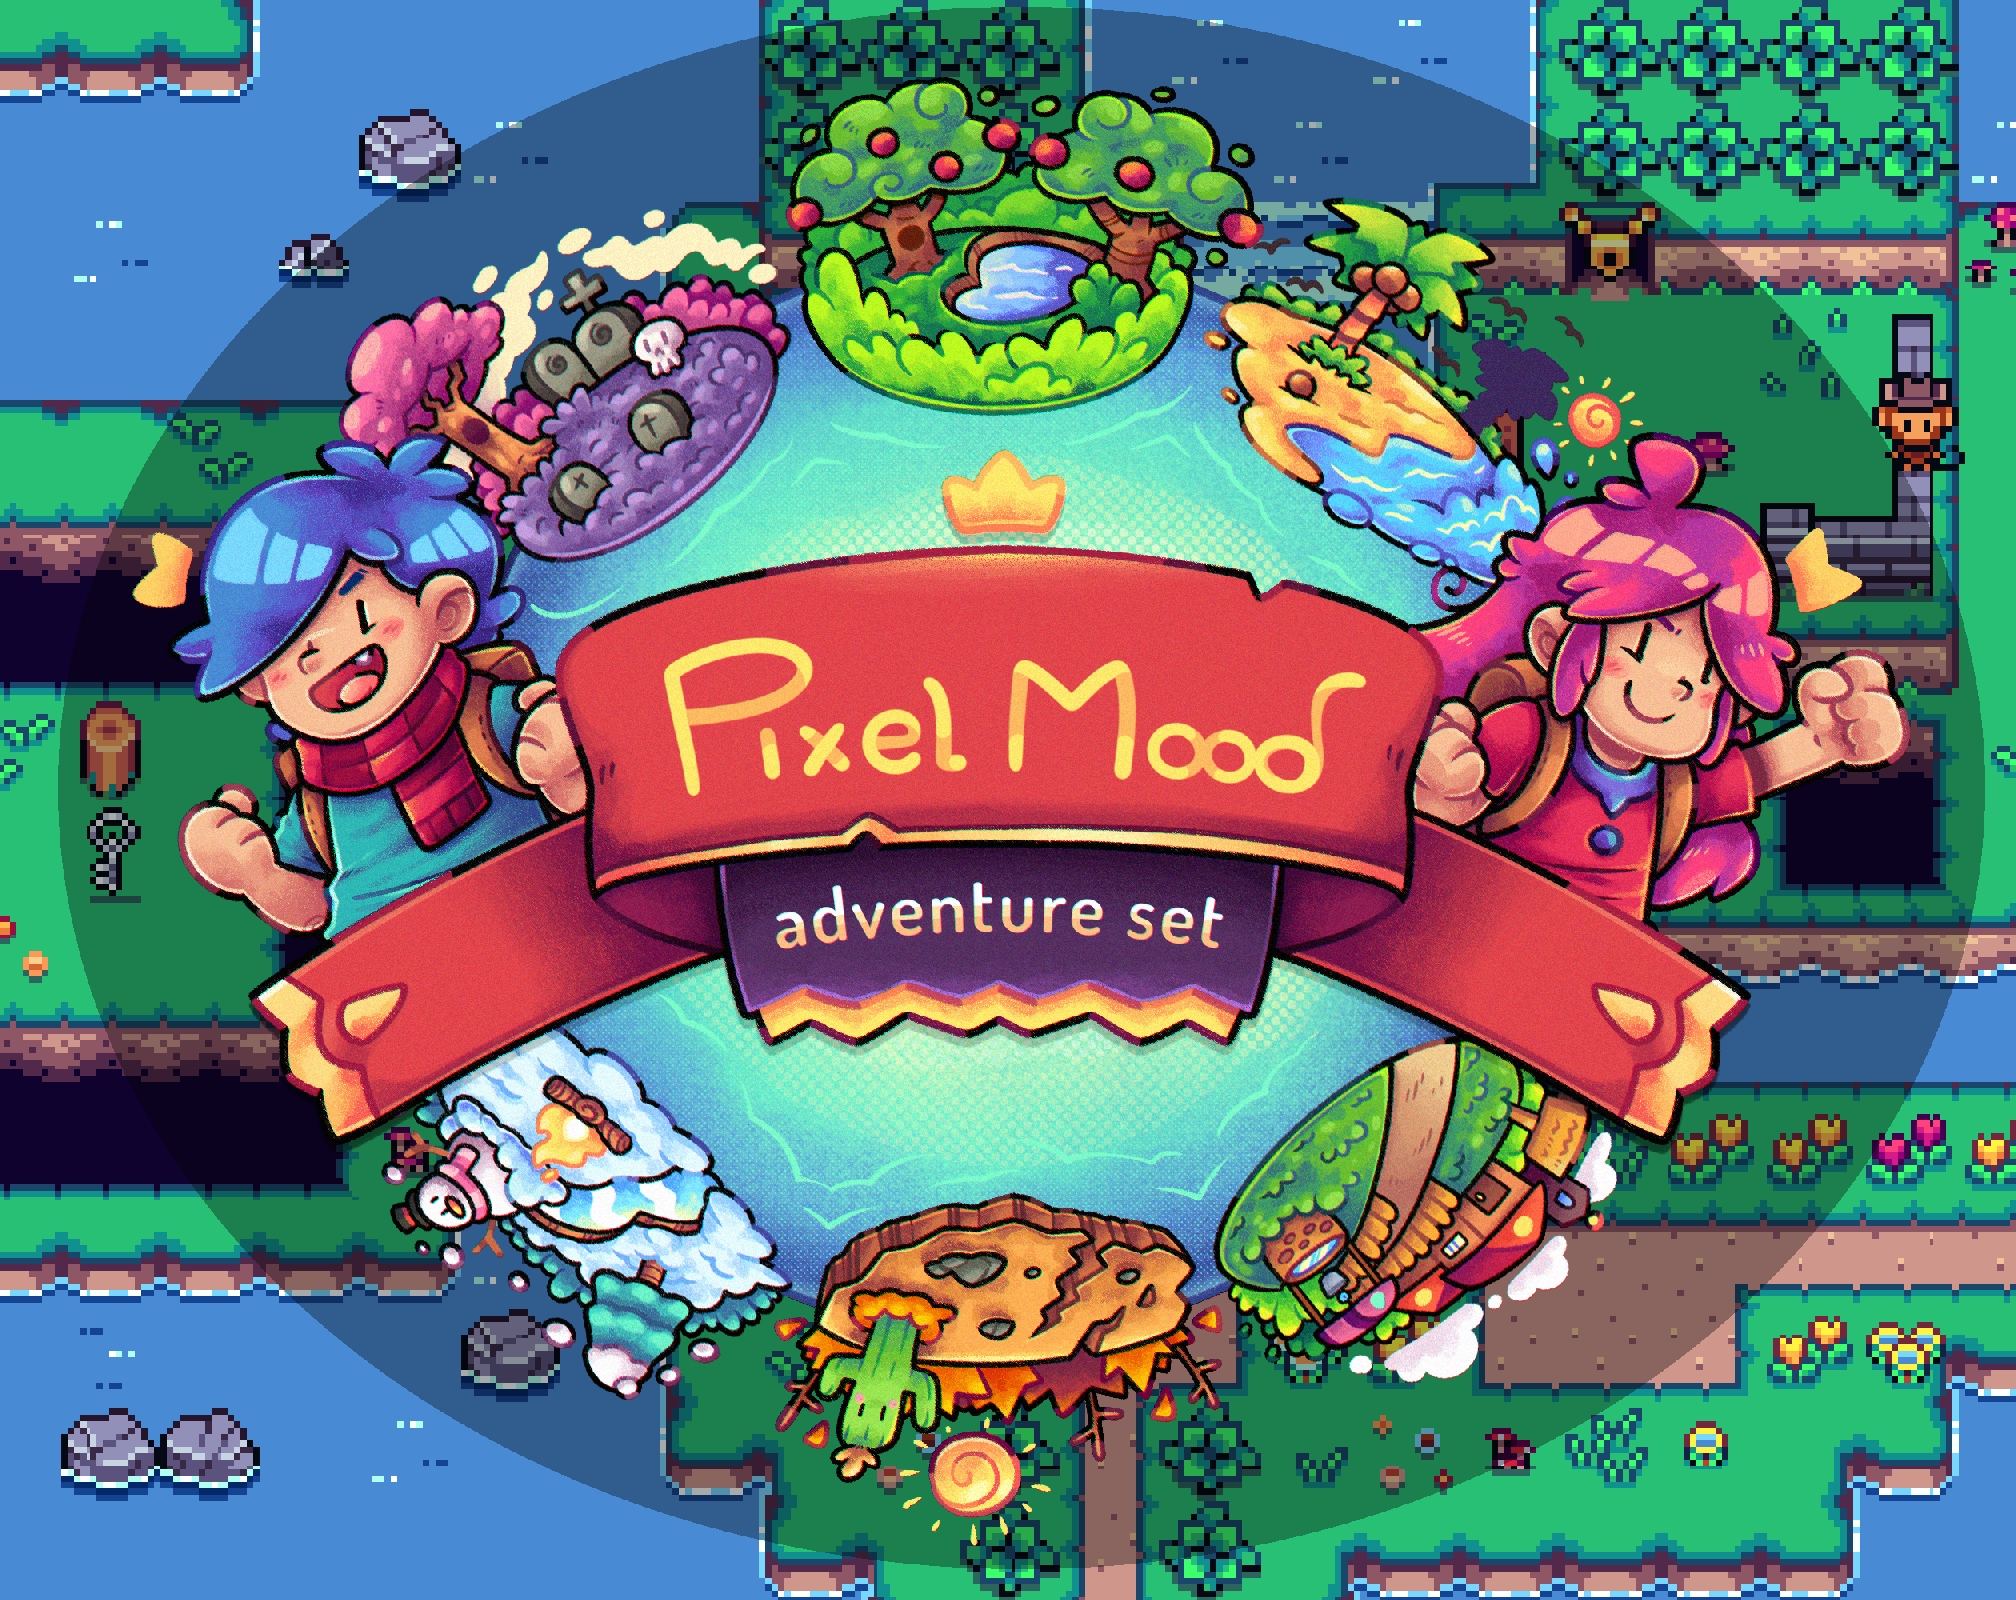 Pixel Mood - Adventure Set